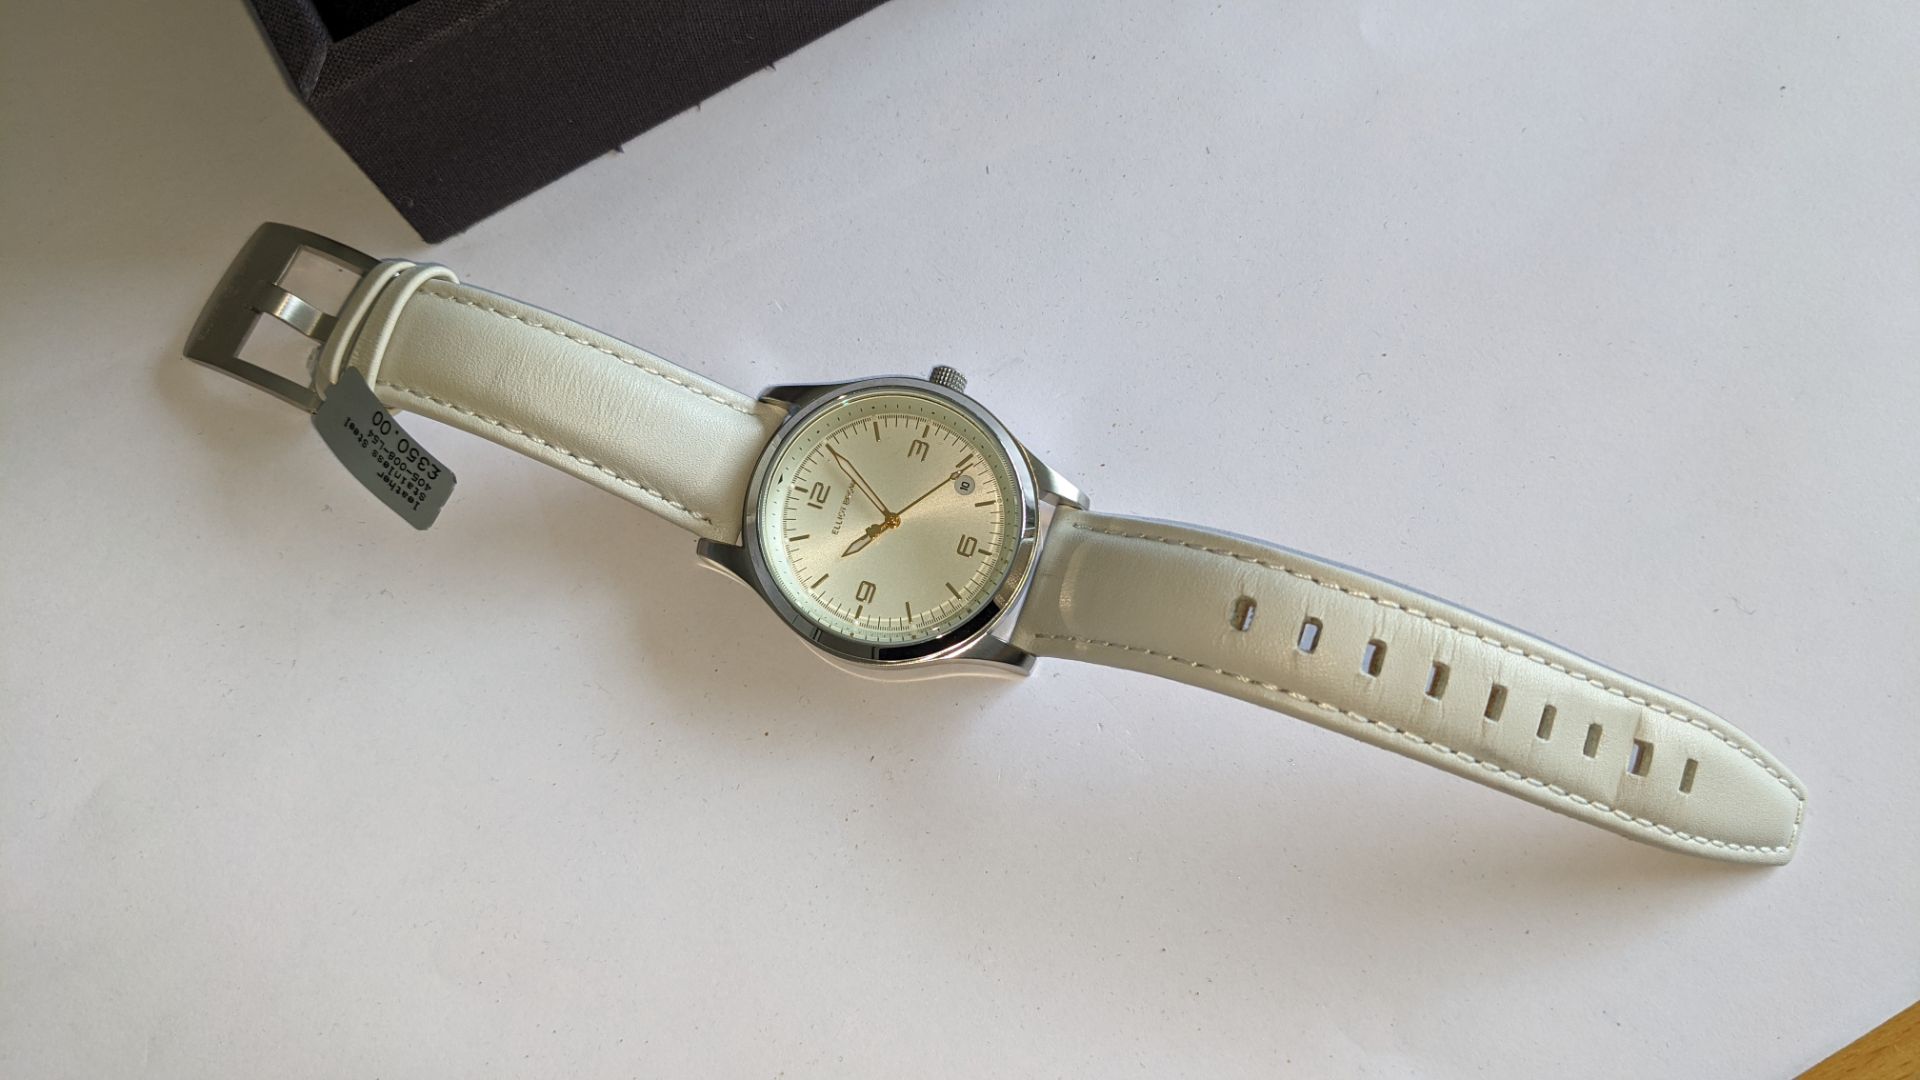 Elliot Brown The Kimmeridge watch, product code 405-008-L54. Stainless steel, 200M water resistant, - Image 7 of 18